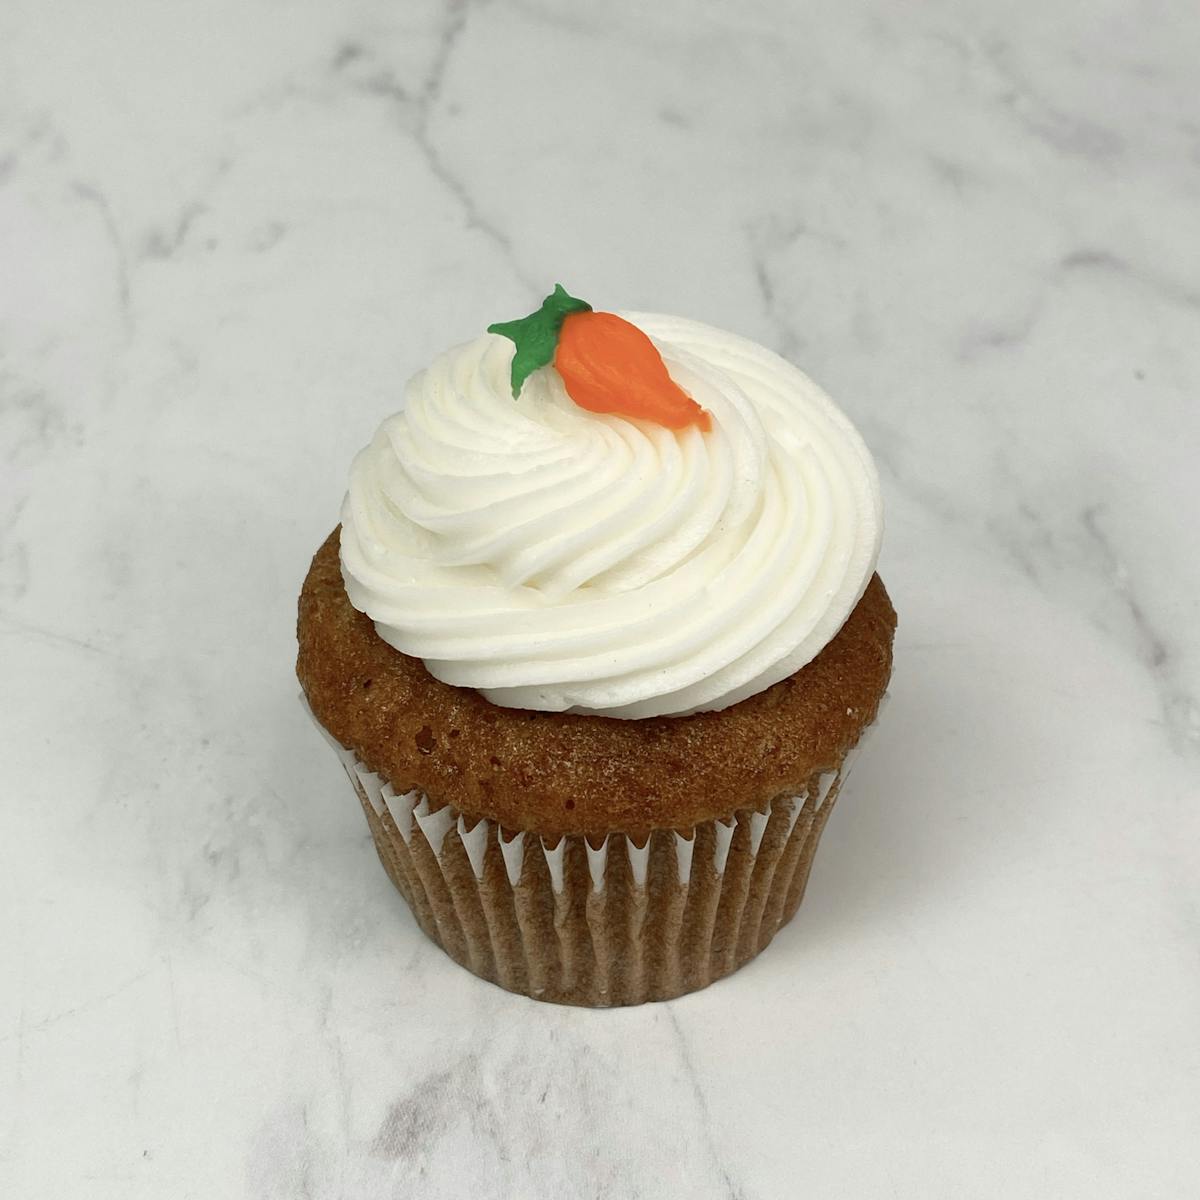 a carrot cupcake